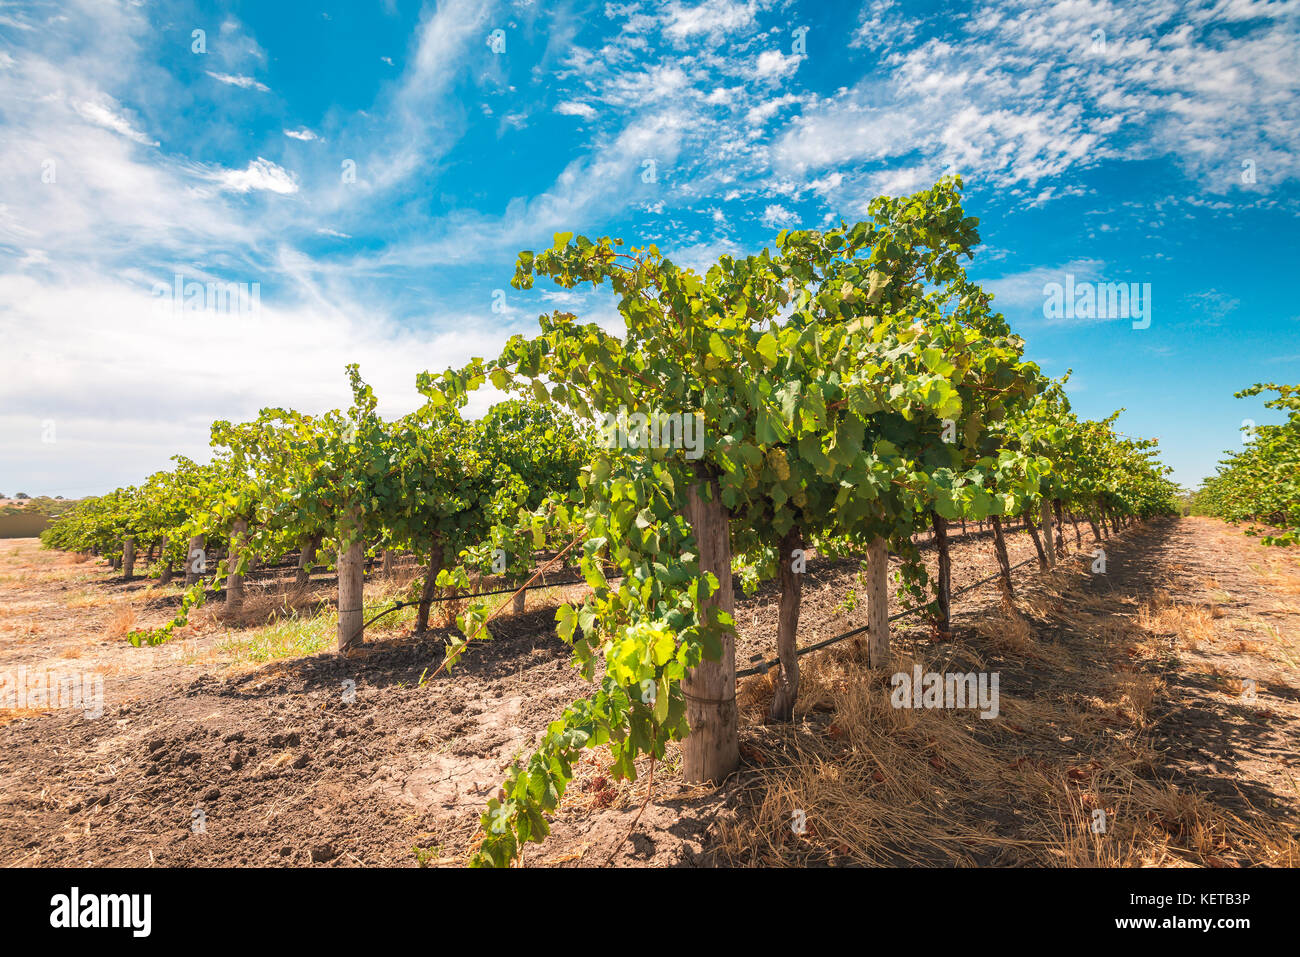 Grapevine field in Barossa valley, South Australia Stock Photo